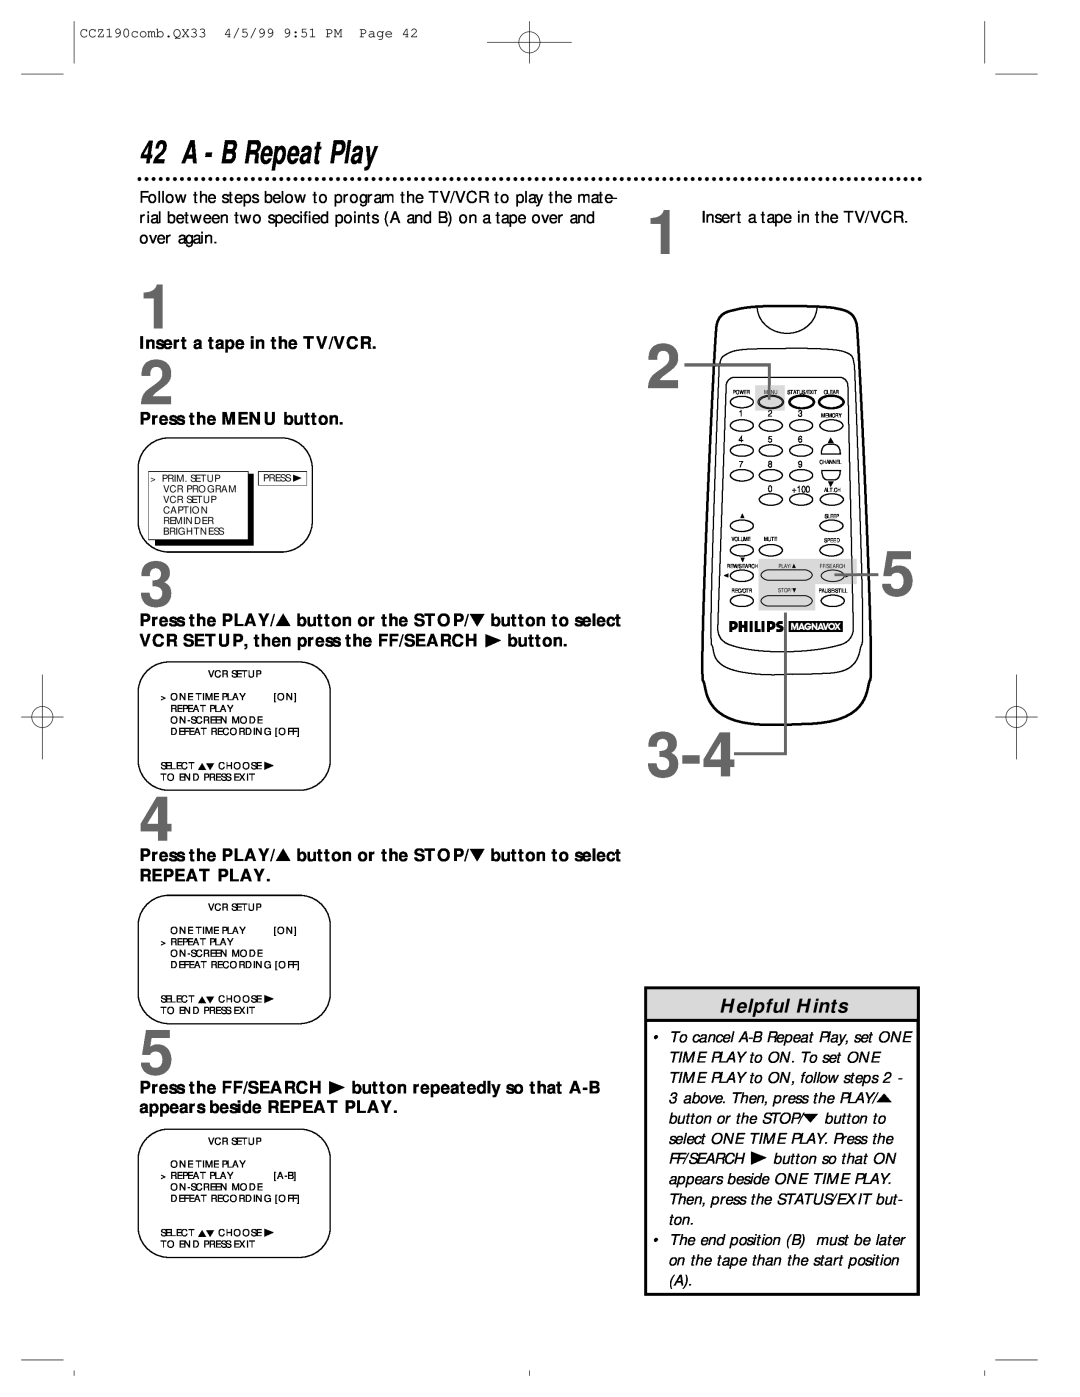 Magnavox CCZ190AT owner manual A - B Repeat Play, Helpful Hints, CCZ190comb.QX33 4/5/99 951 PM Page 